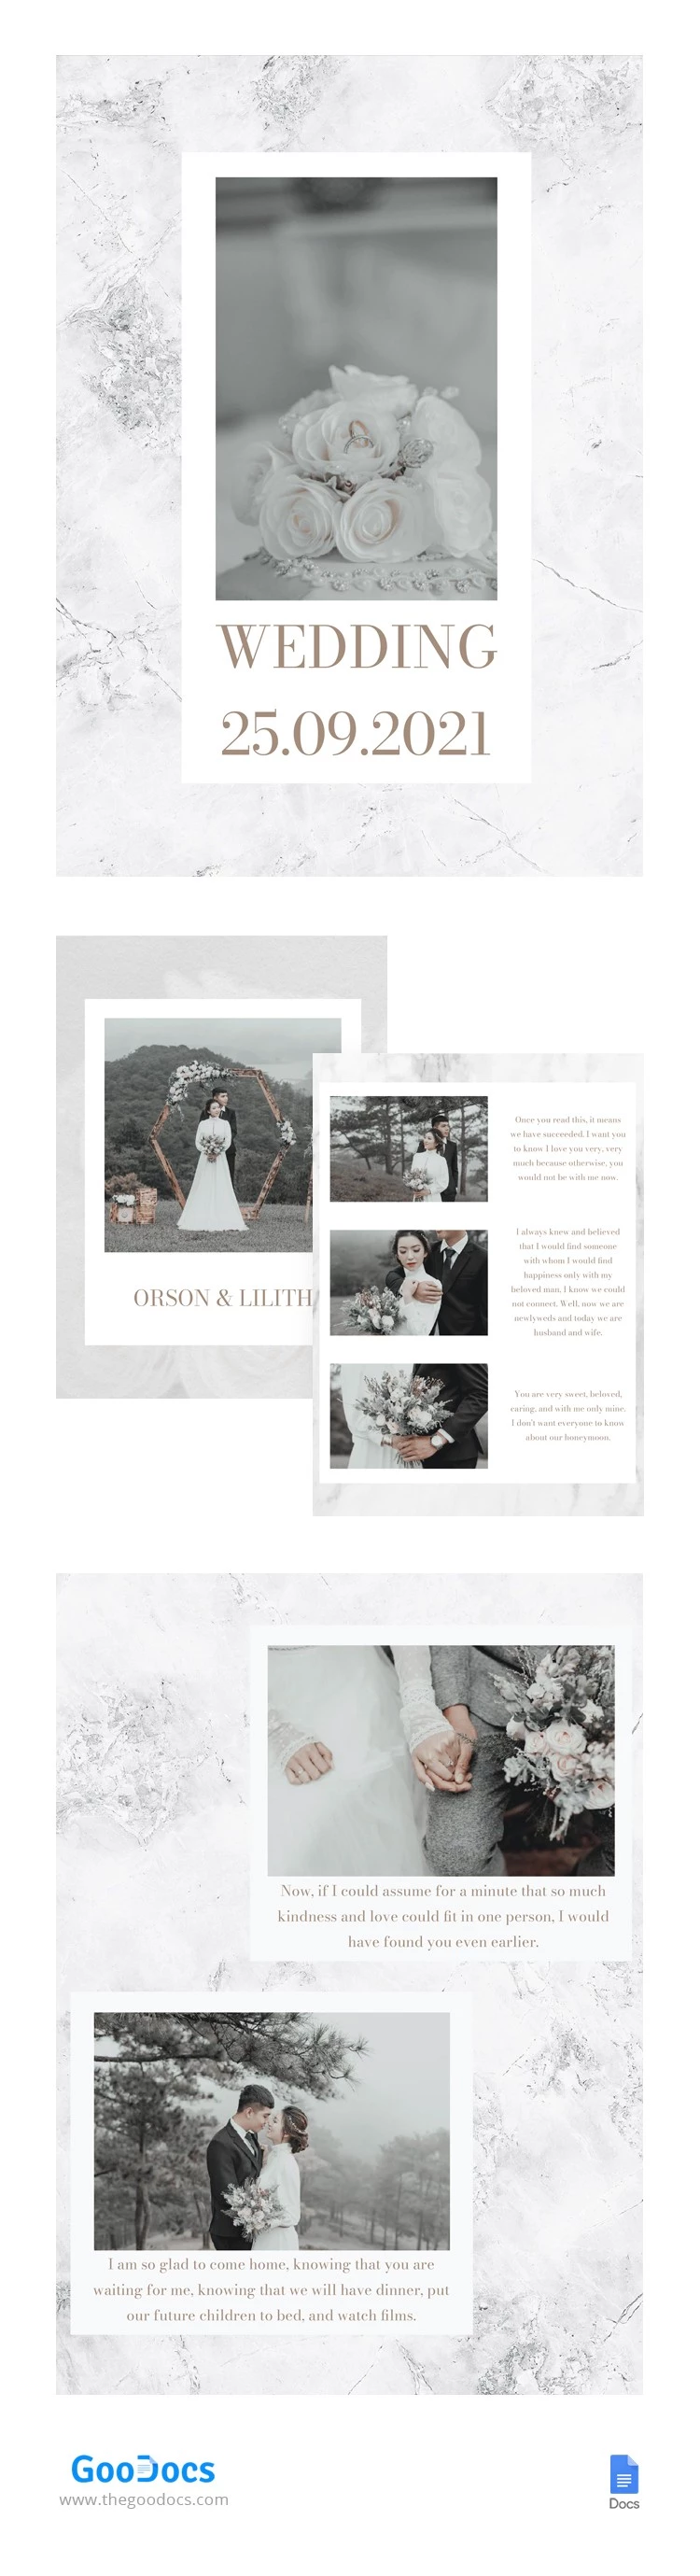 Album photo de mariage en marbre - free Google Docs Template - 10062828